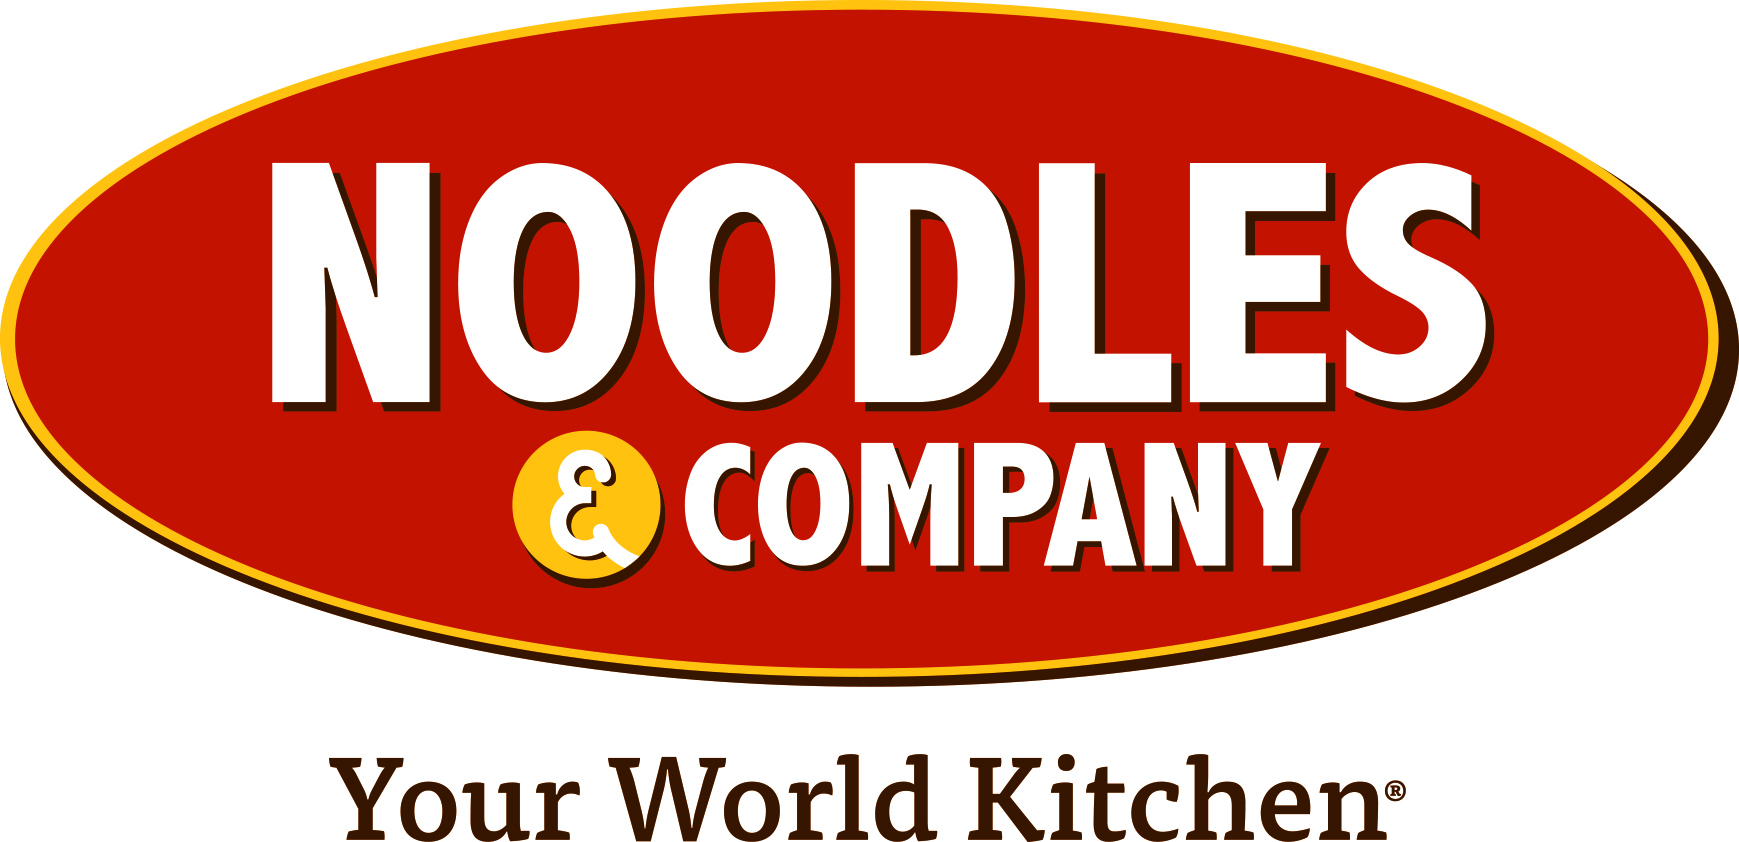 noodles company